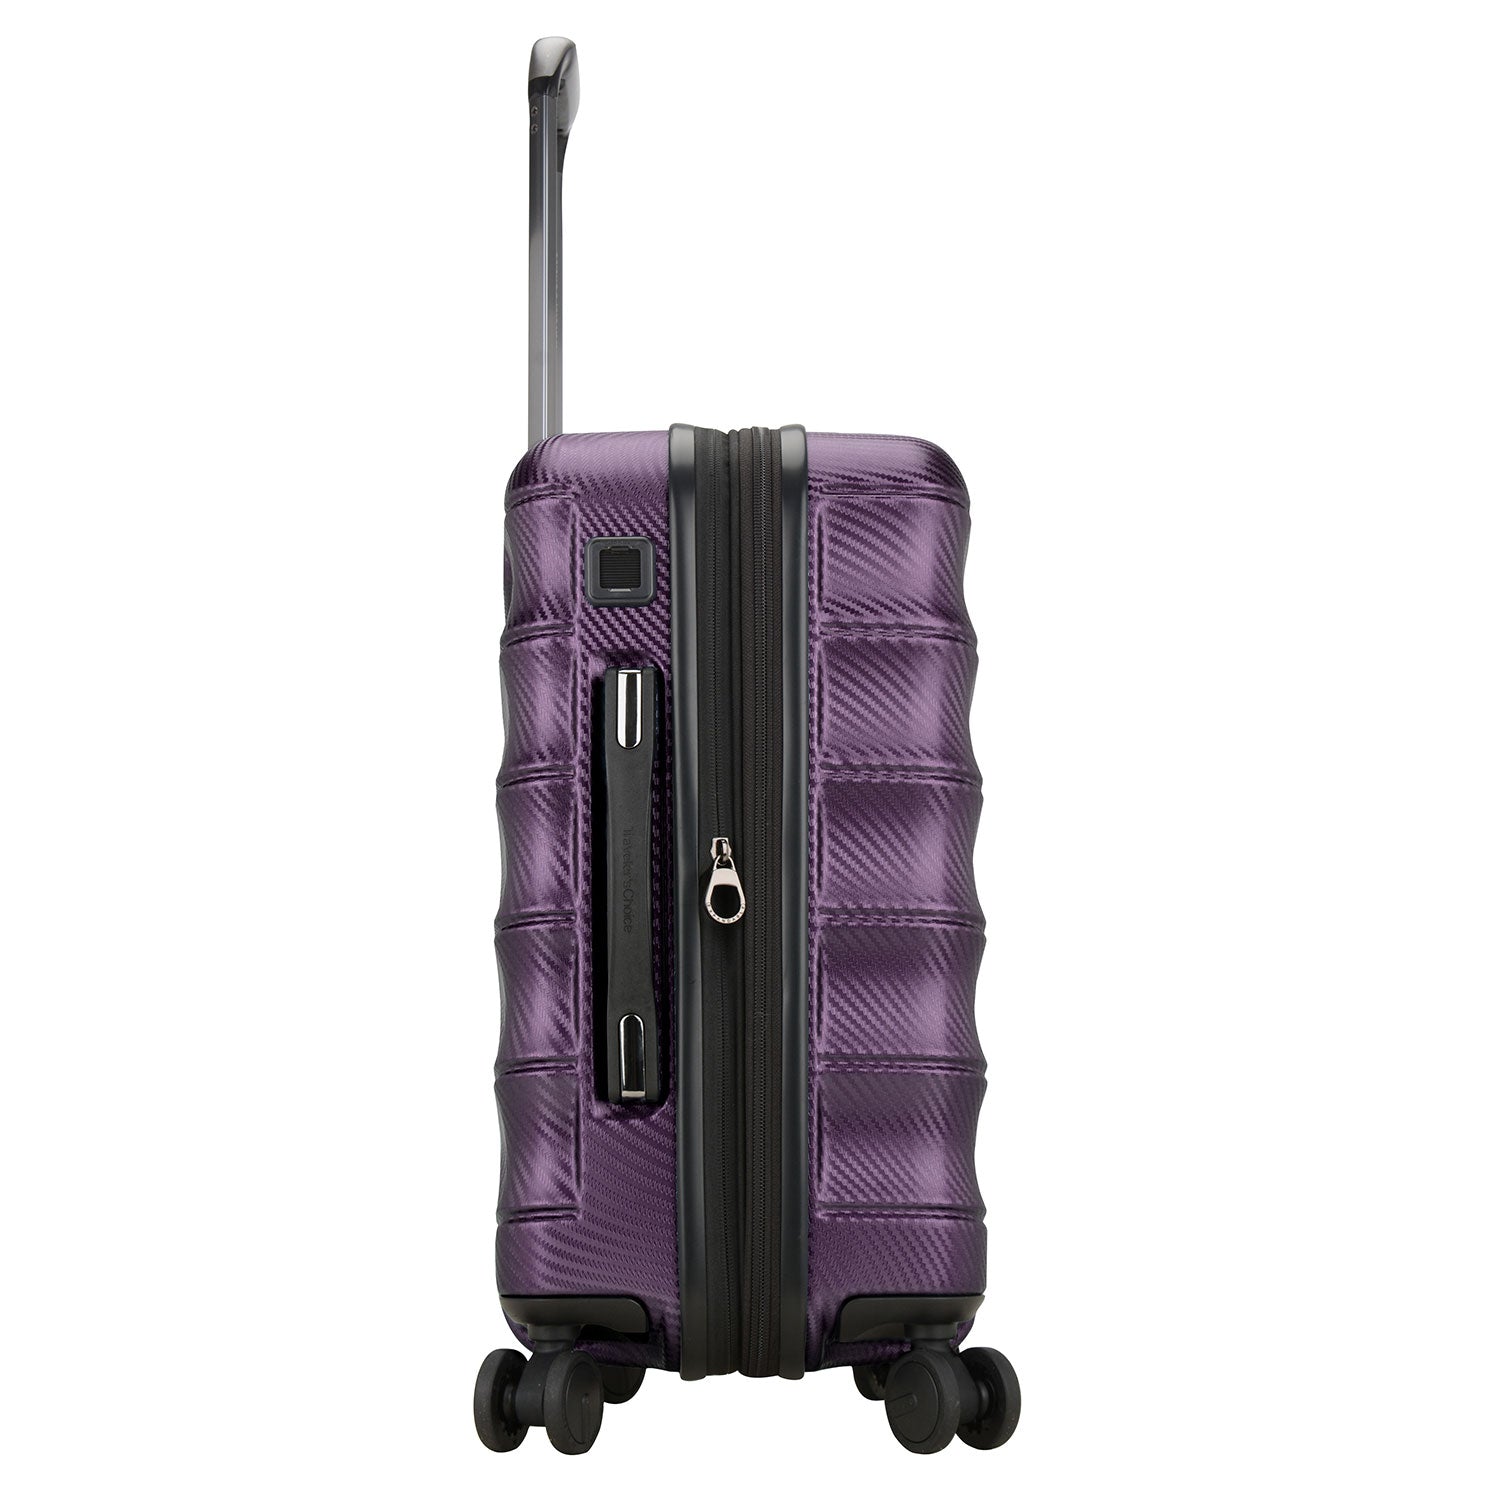 Side profile of luggage